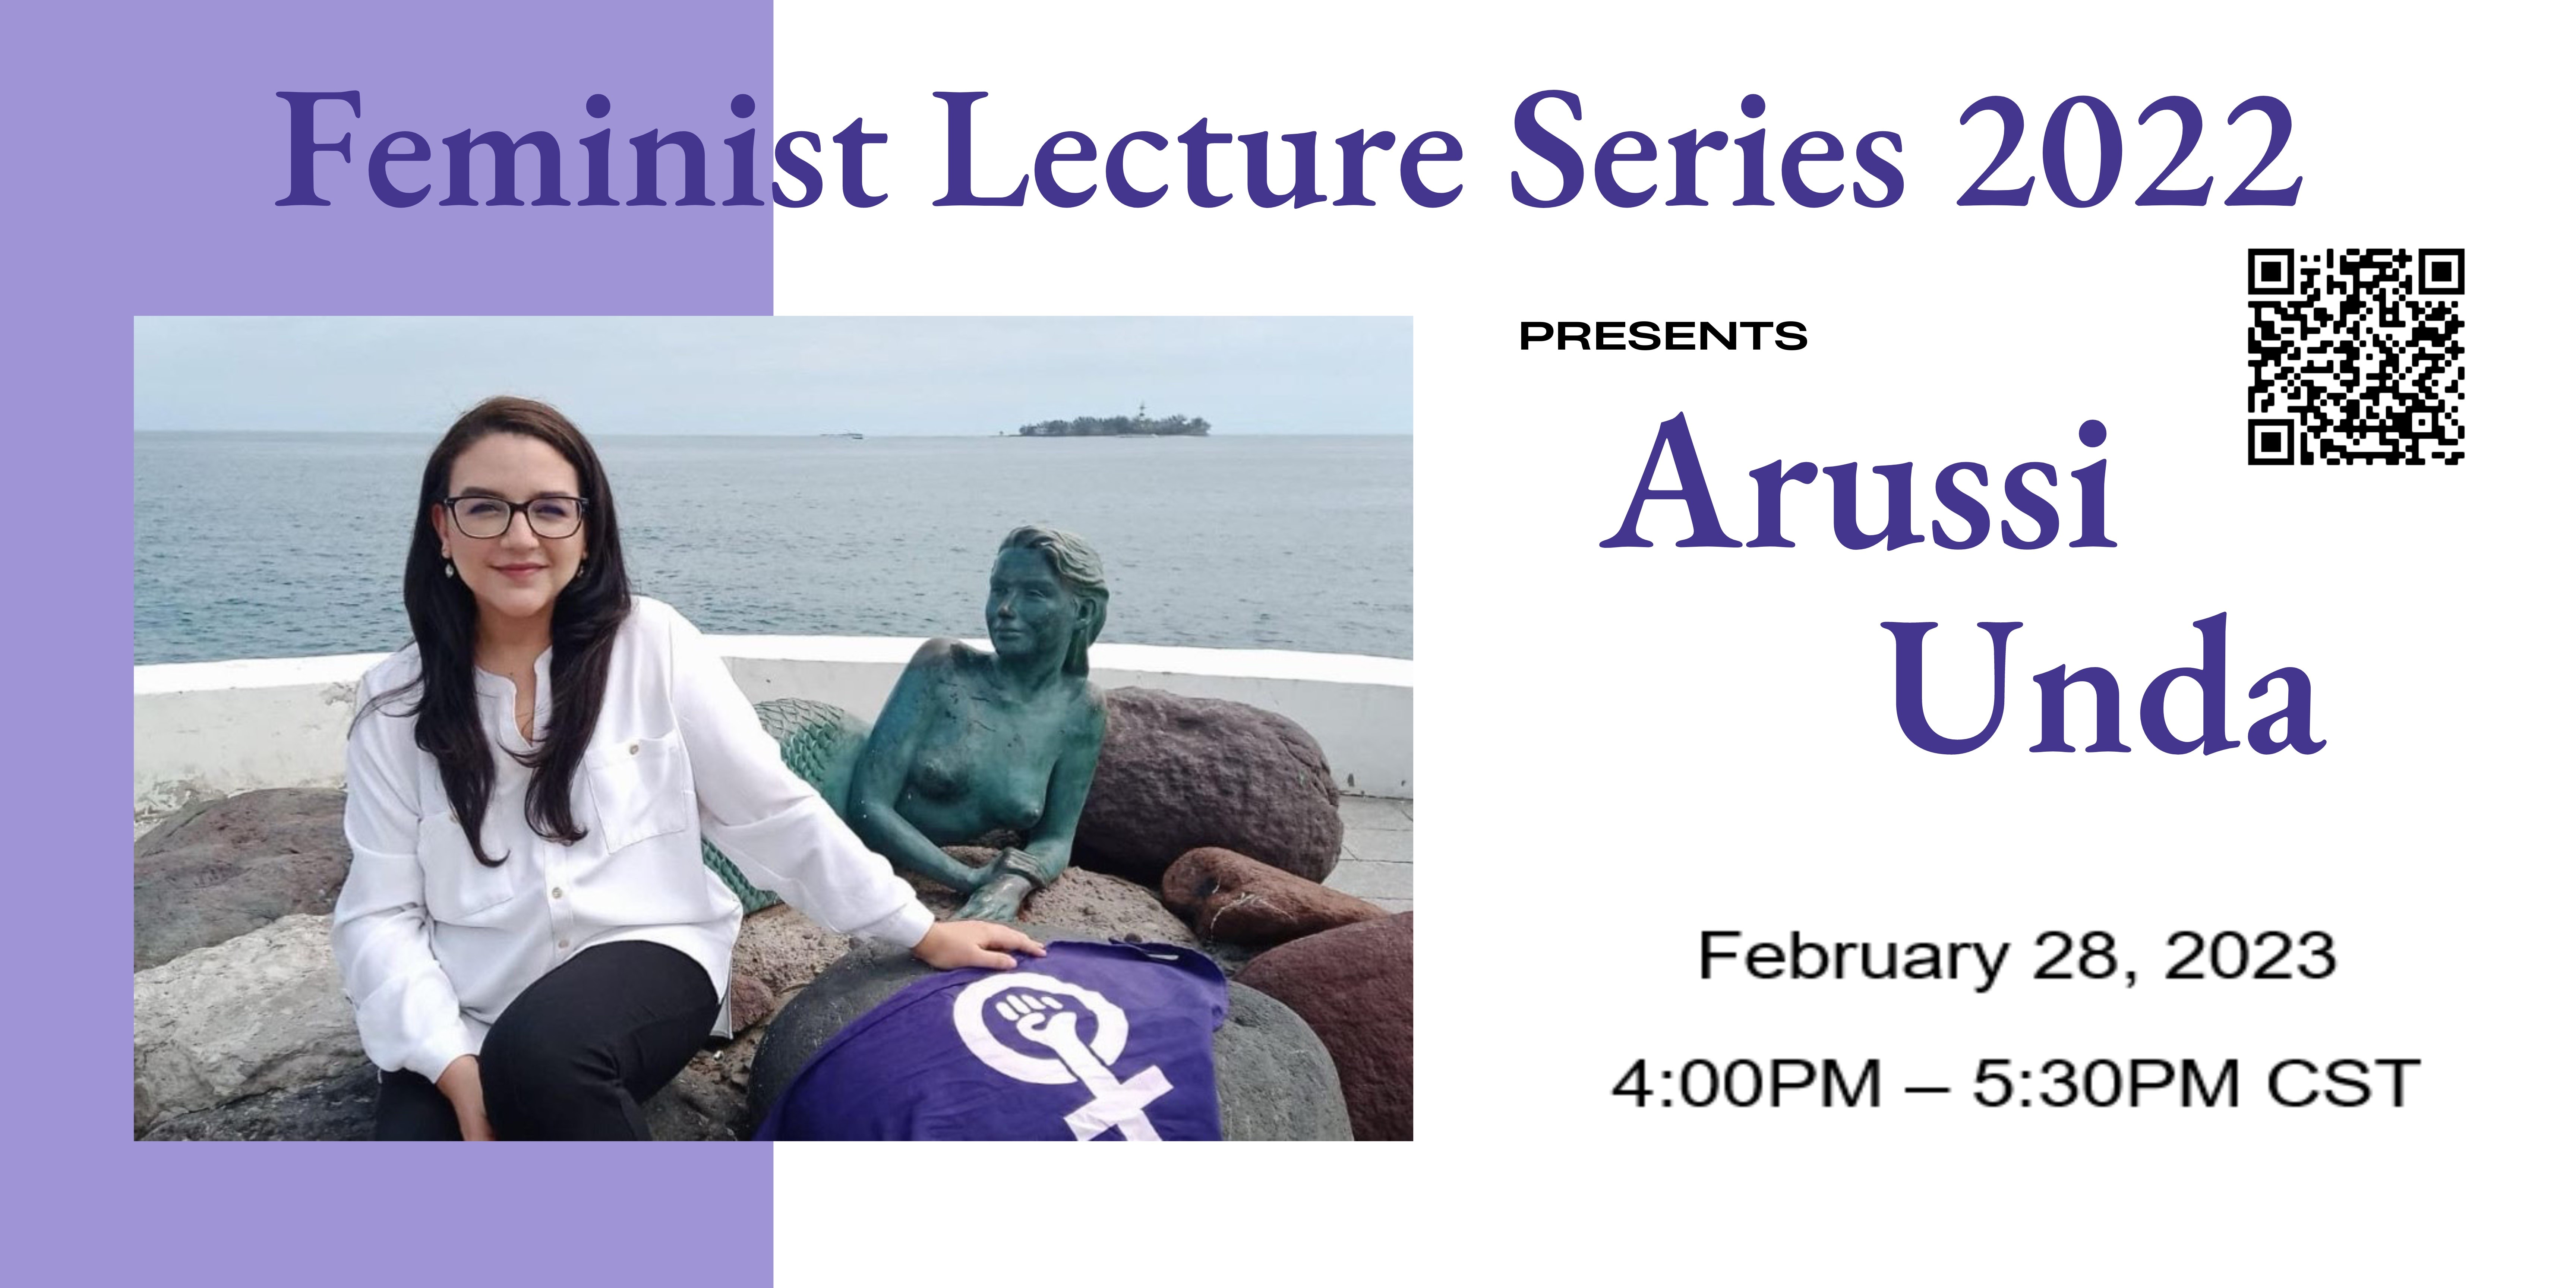 Femenist Lecture Series 2022 presents Arussi Unda